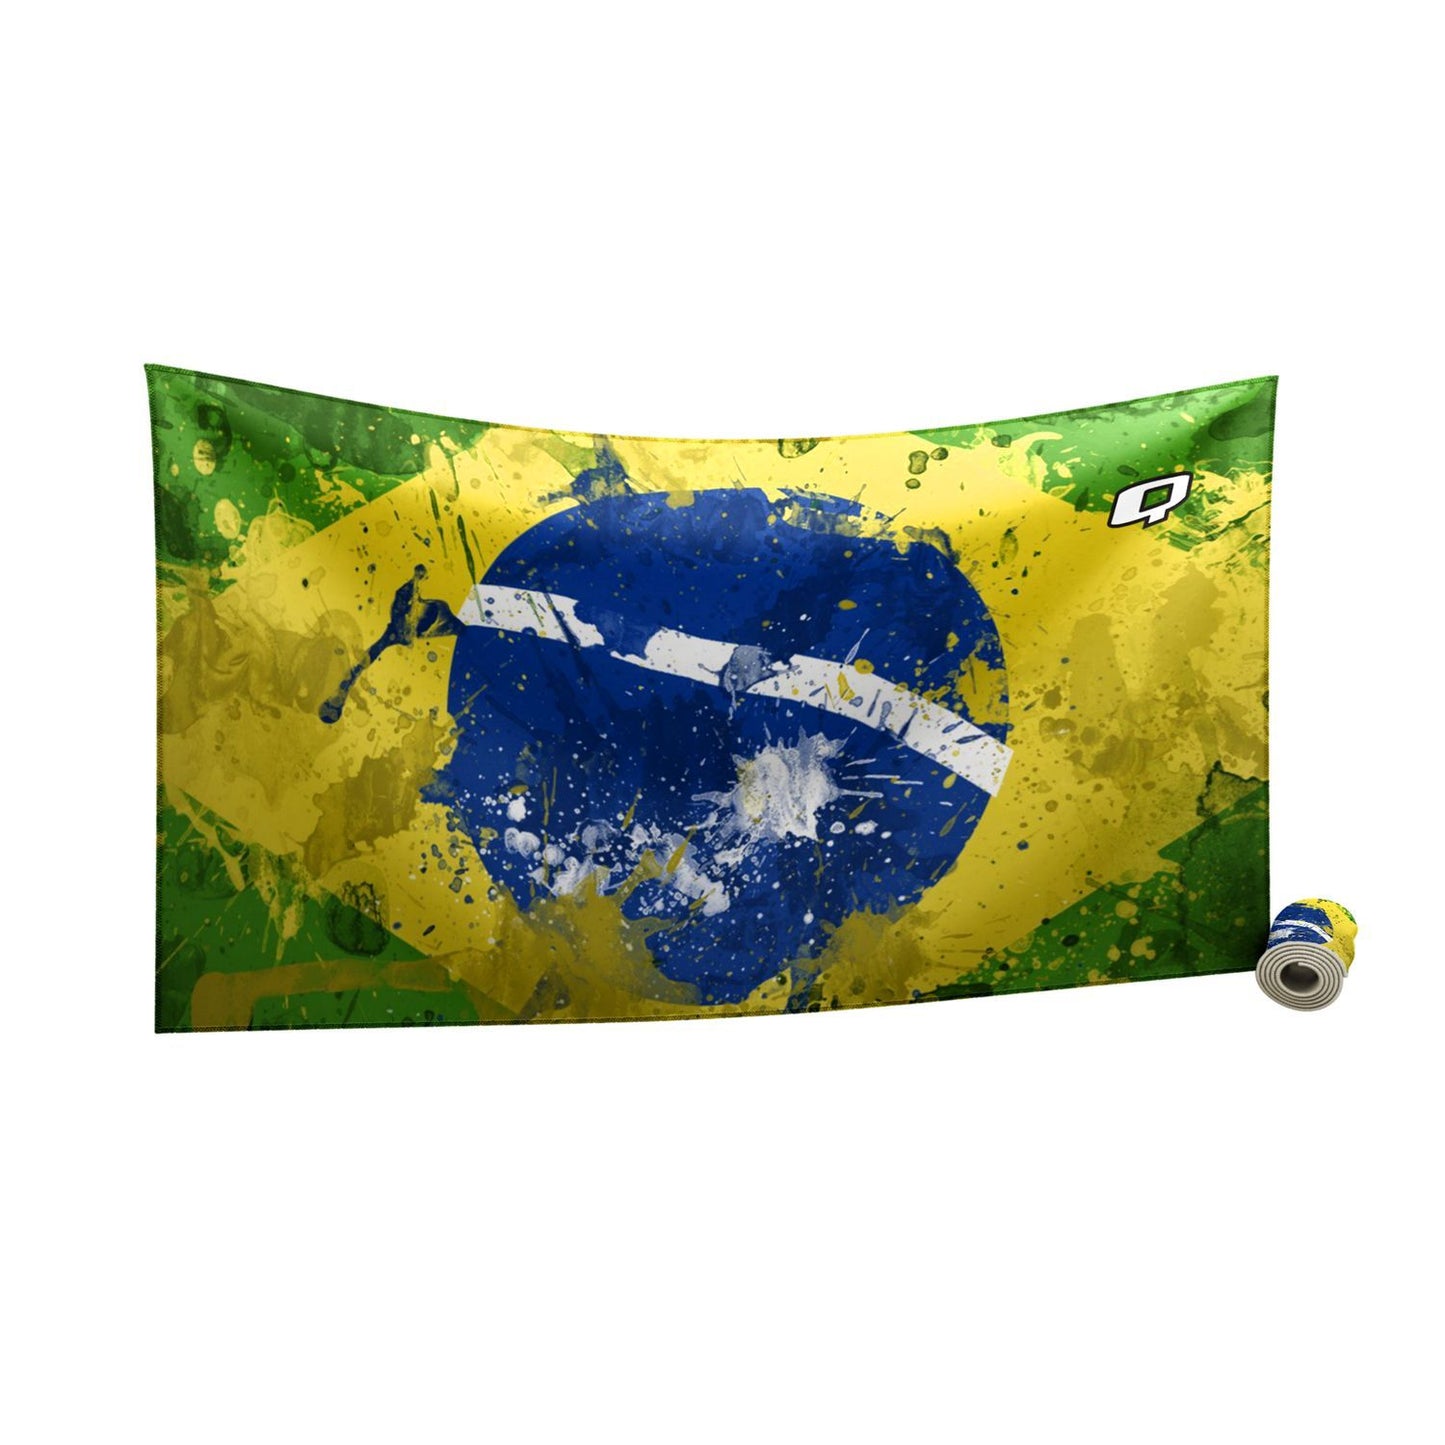 Brazil 2.0 Quick Dry Towel